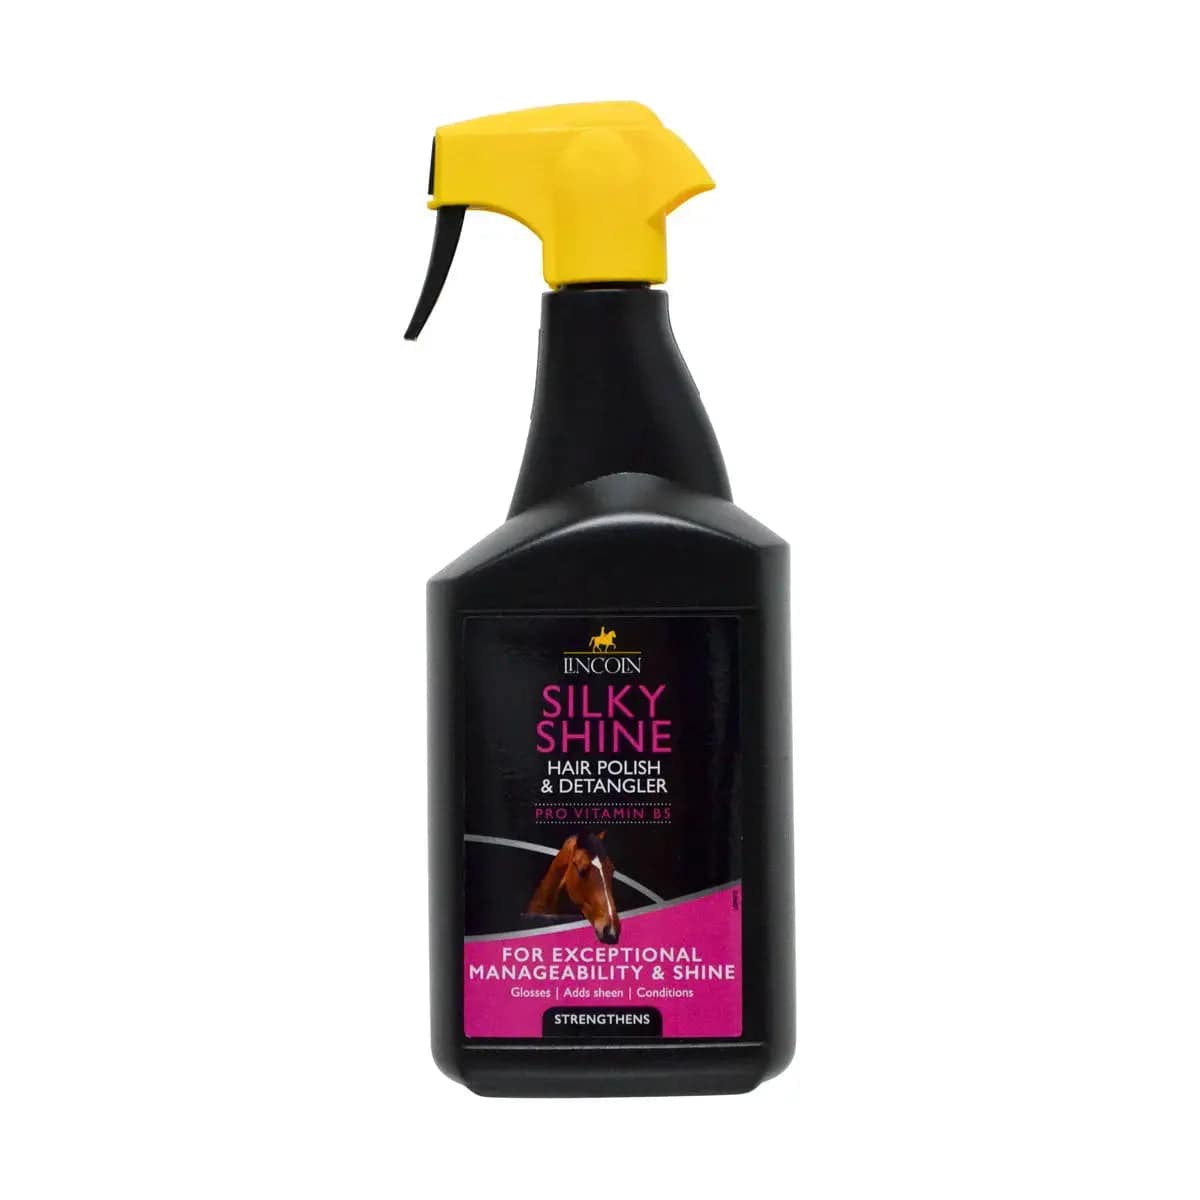 Lincoln Silky Shine Hair Polish and Detangler 1 Litre Lincoln Shampoos & Conditioners Barnstaple Equestrian Supplies